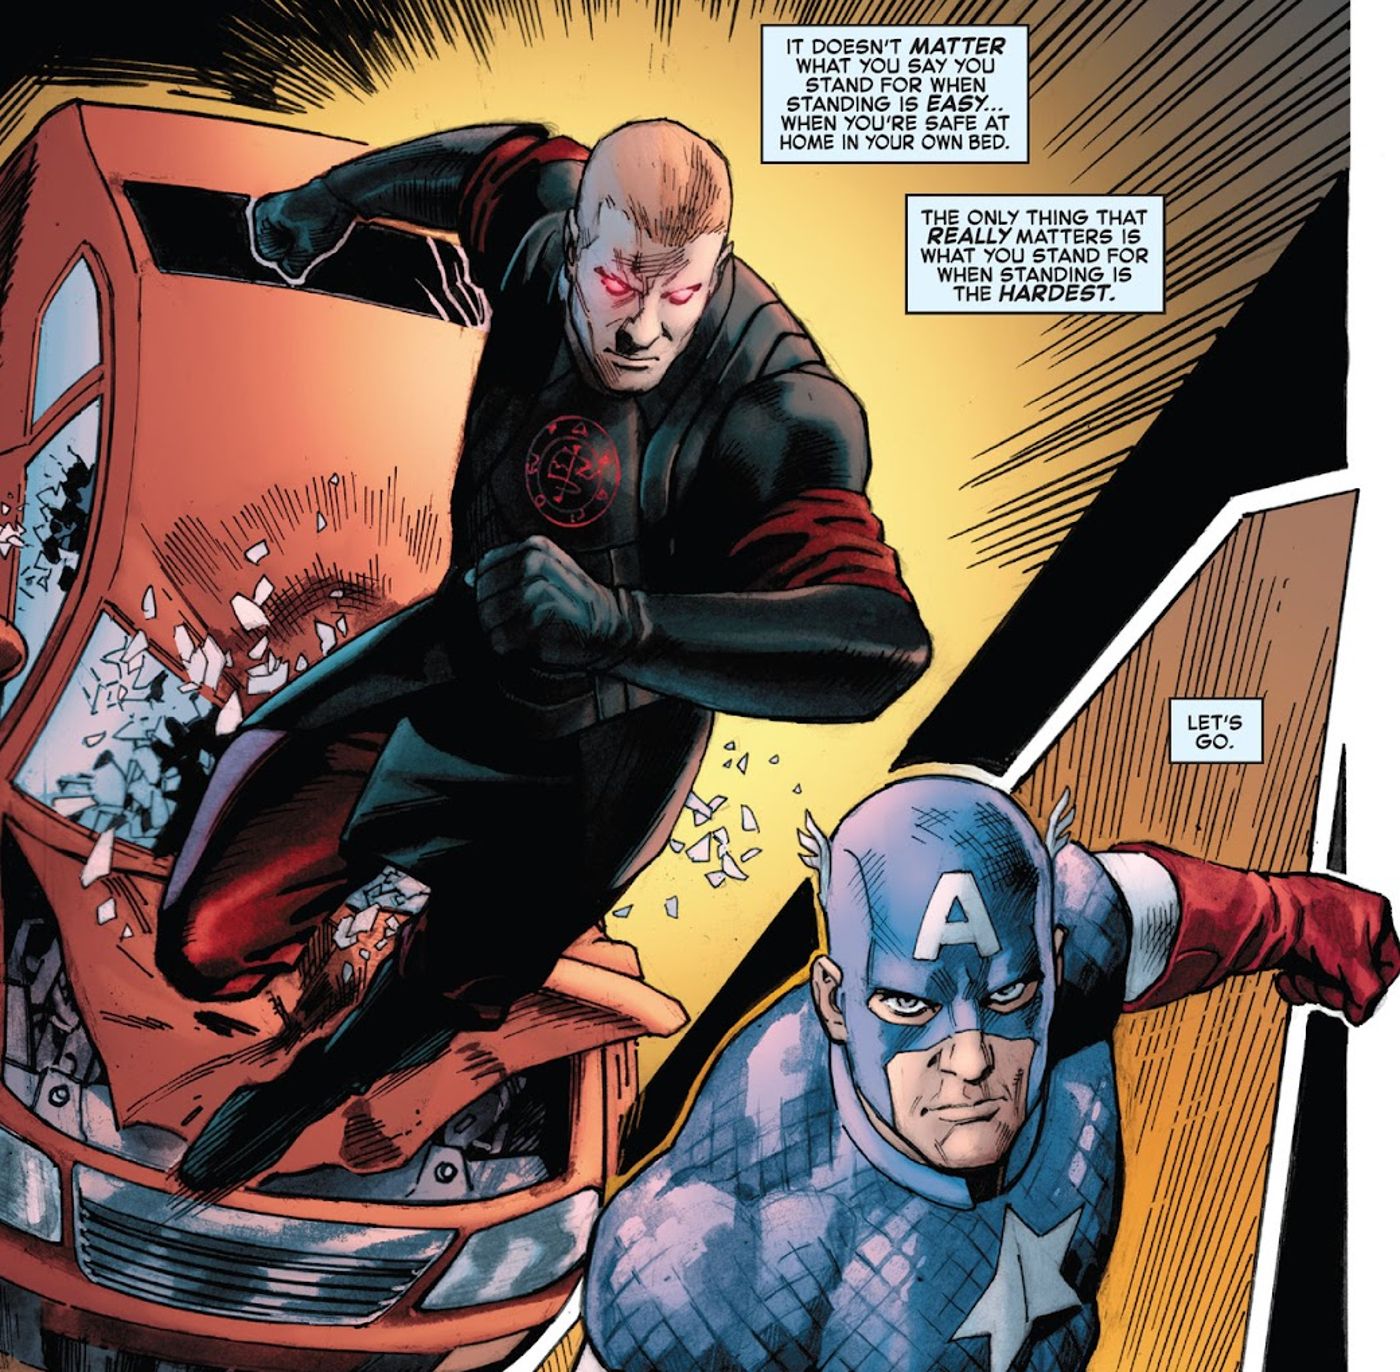 Captain America #3, the Emissary attacks Captain America